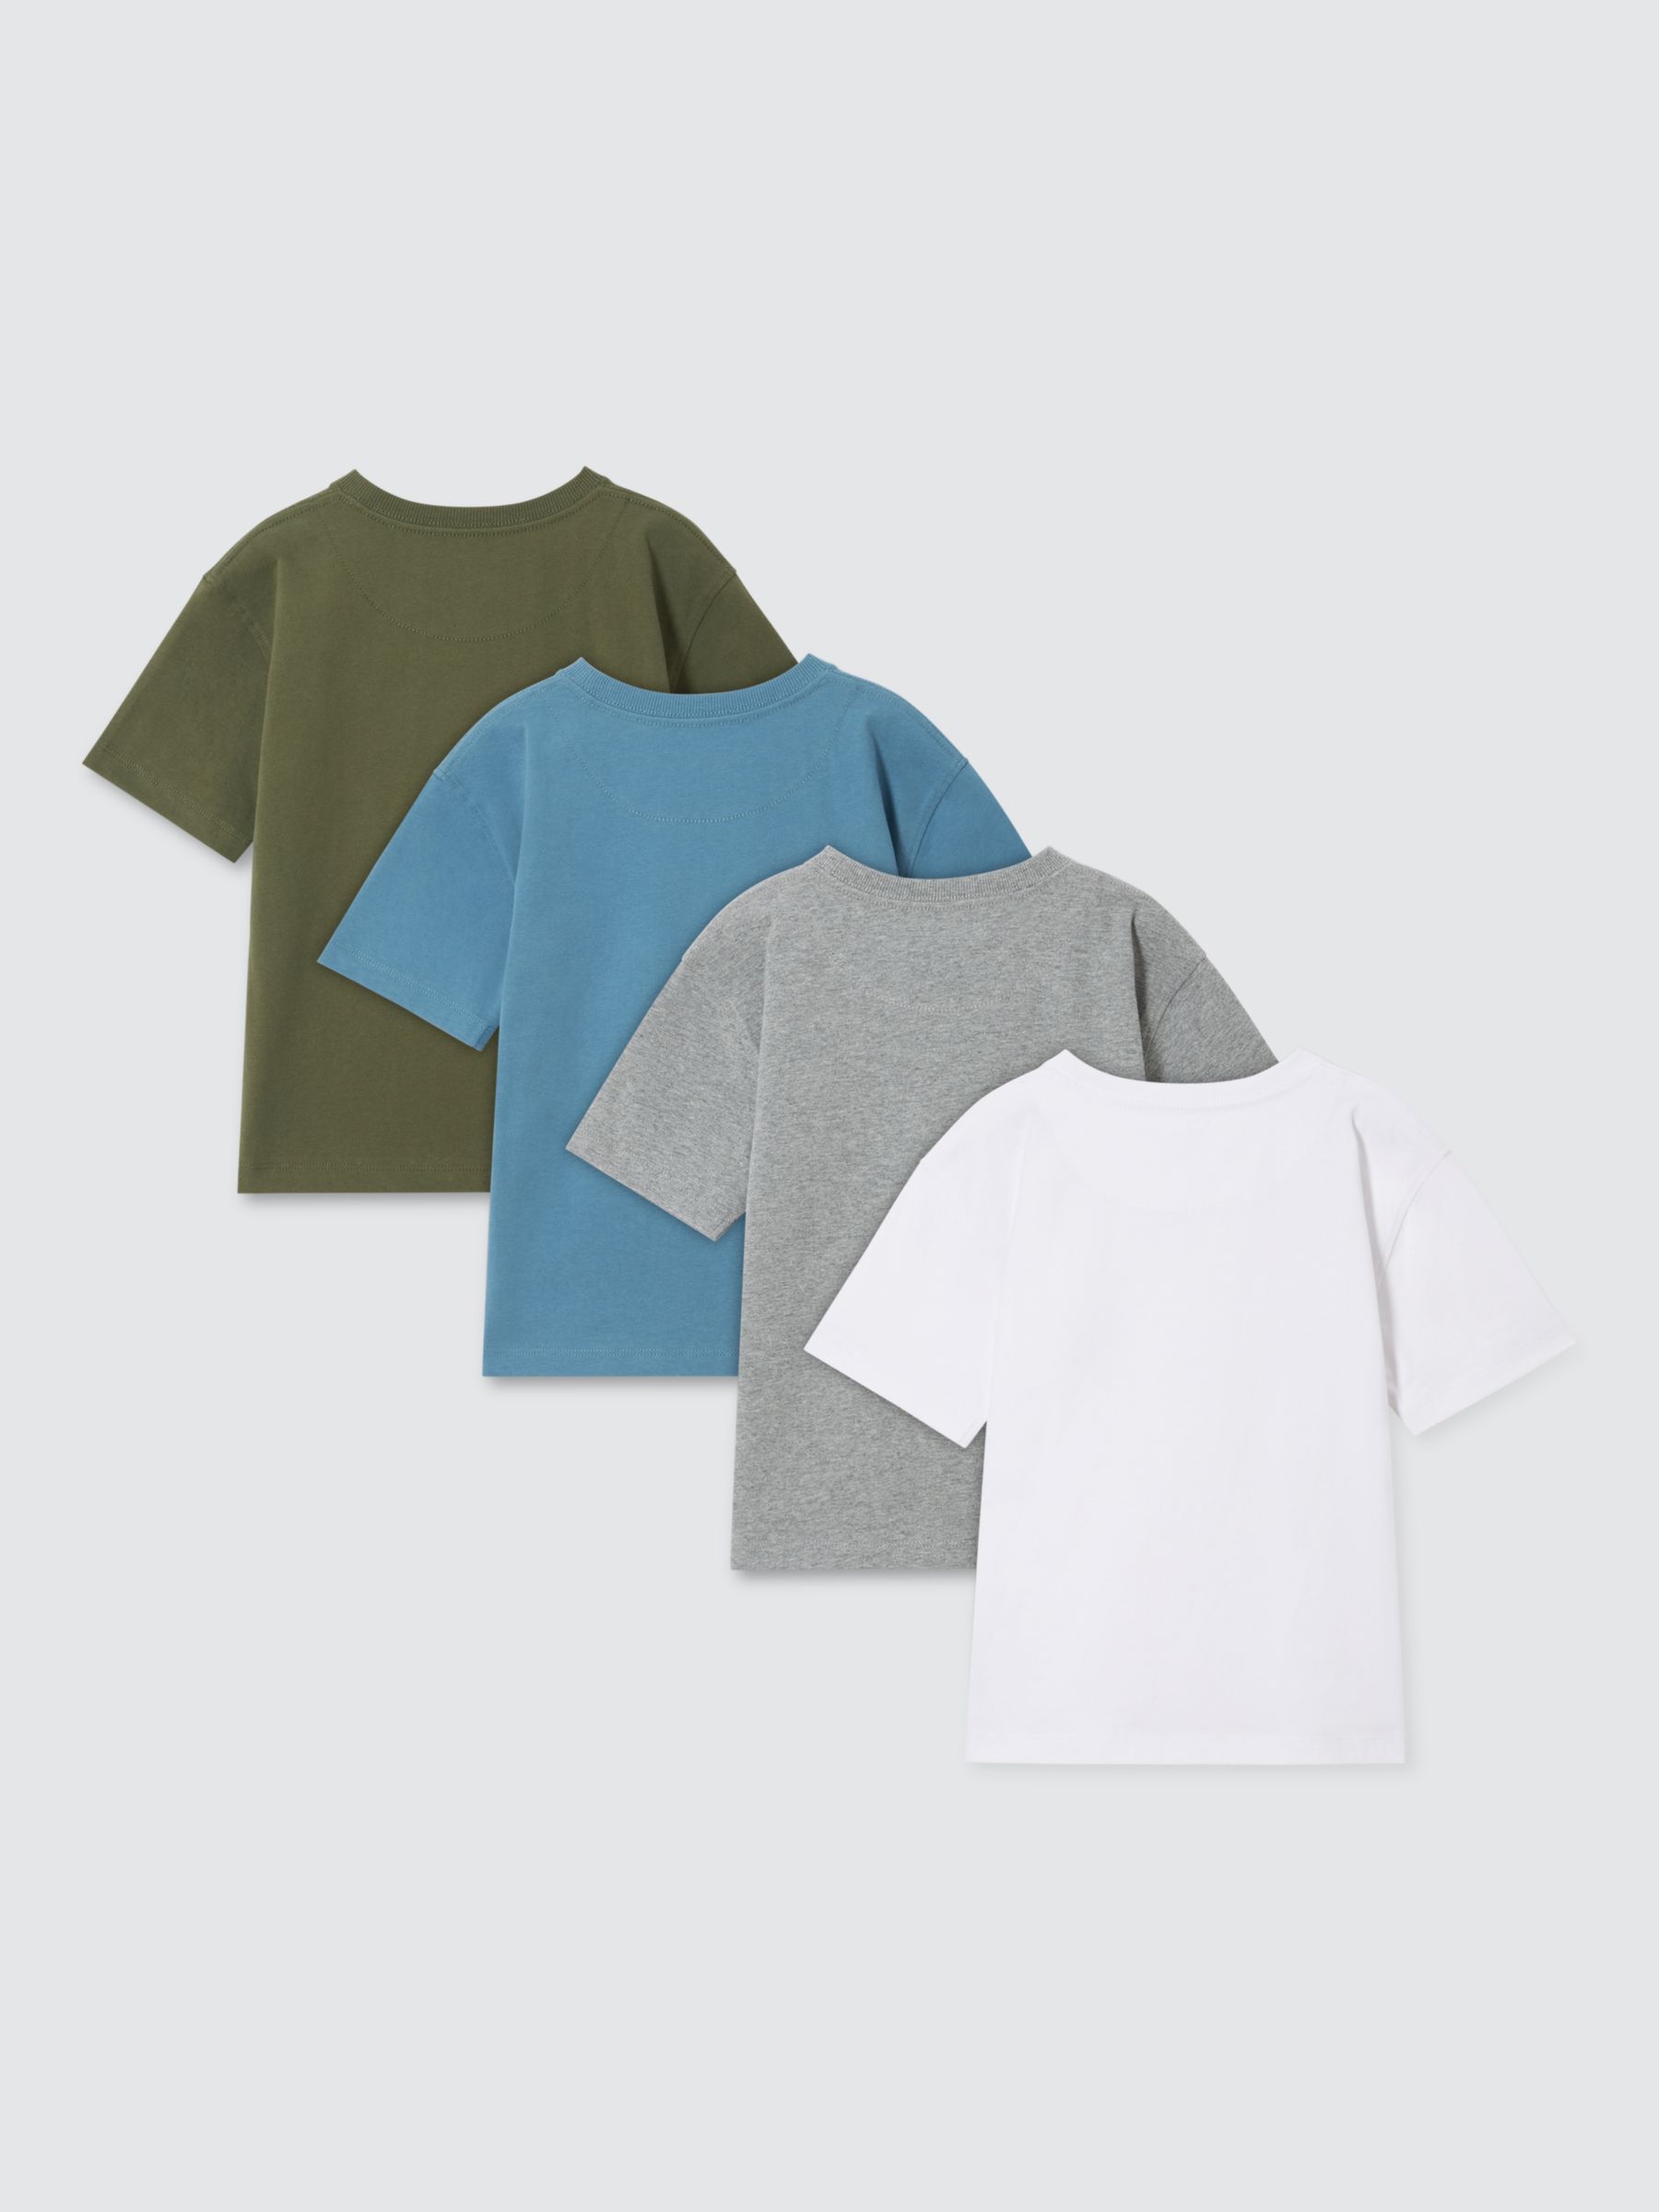 John Lewis Kids' Plain Short Sleeve T-Shirts, Pack of 4, Multi, 7 years